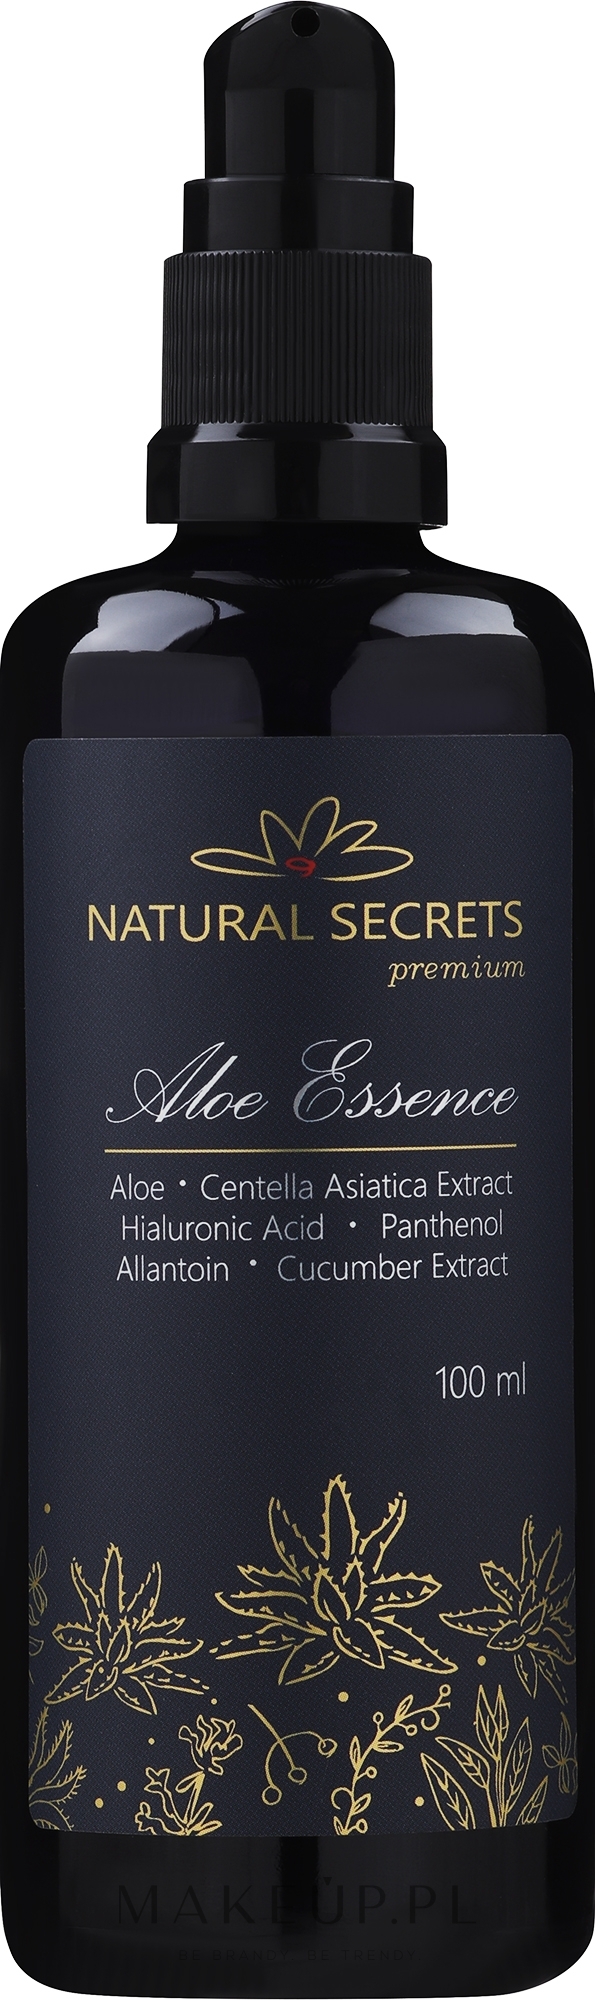 Esencja aloesowa - Natural Secrets Esencja Aloesowa Premium — Zdjęcie 100 ml